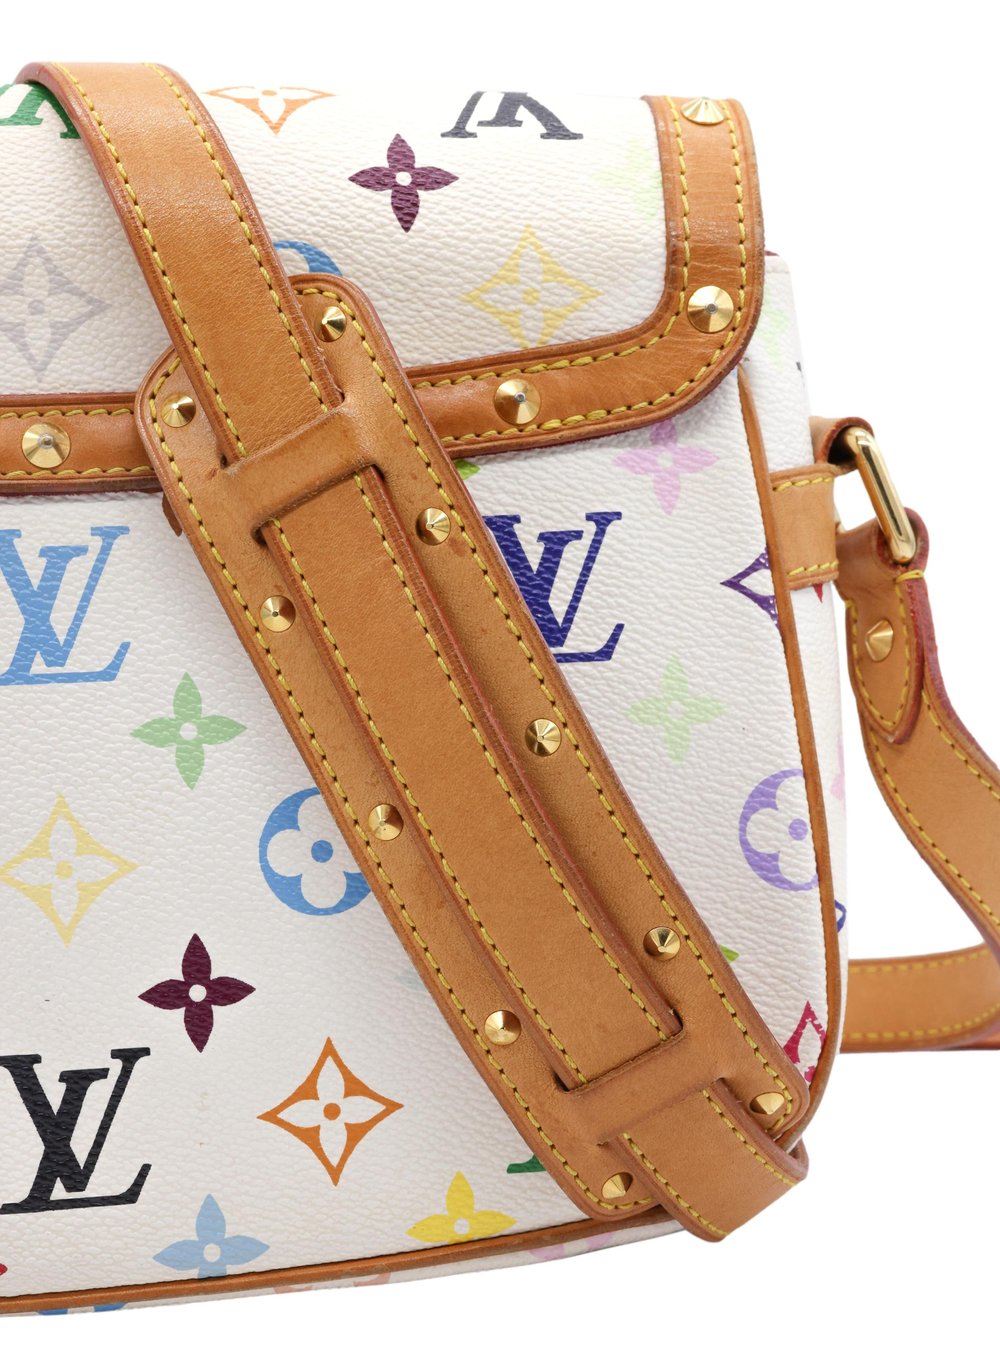 How Louis Vuitton & Takashi Murakami's Monogram Bags Became A